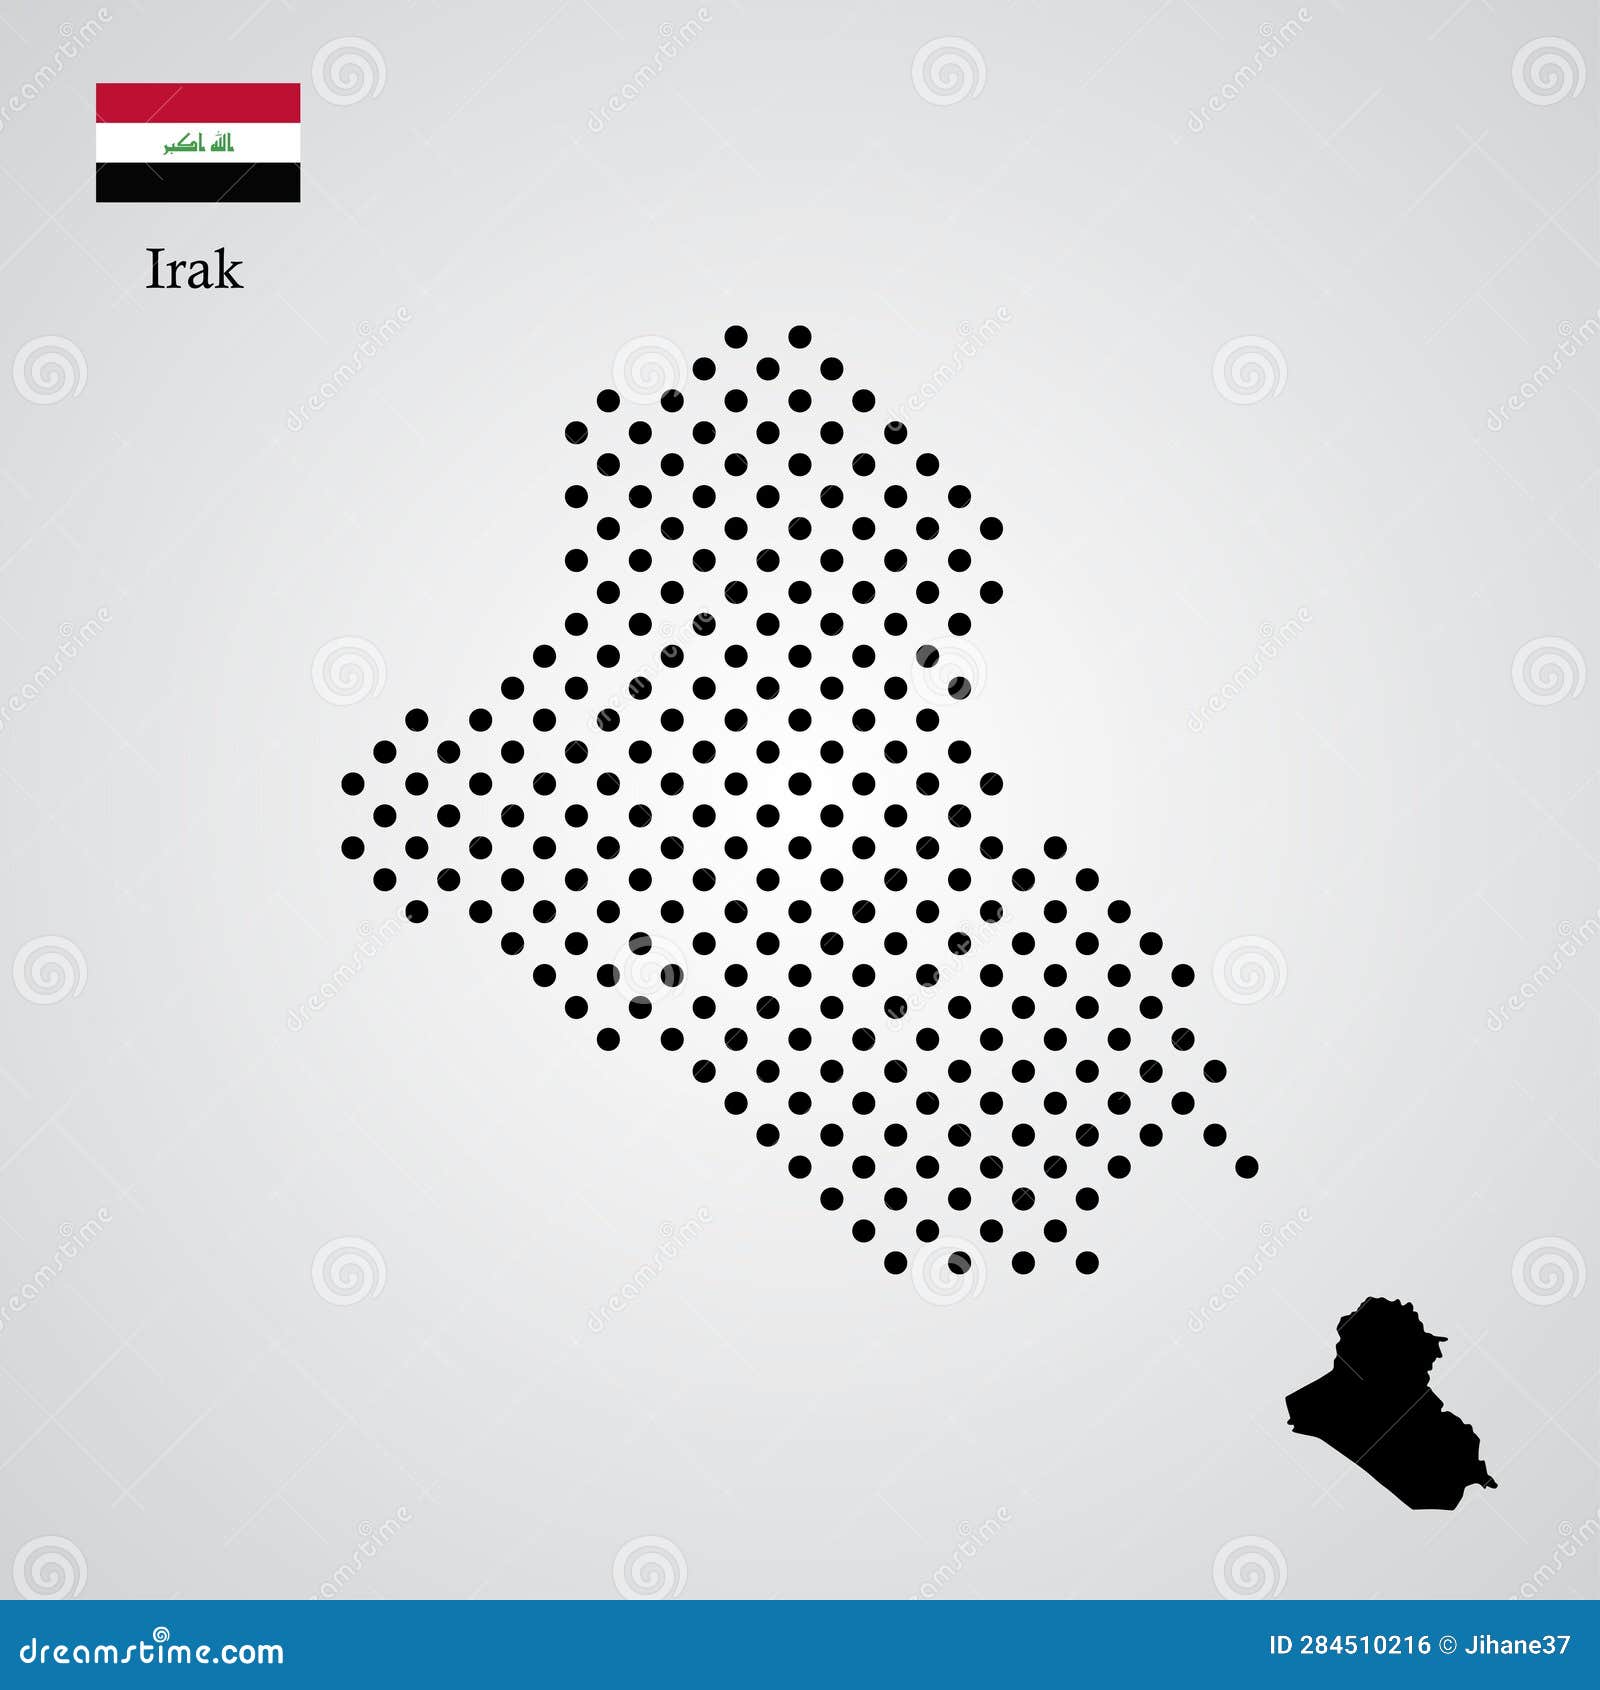 irak map silhouette halftone style